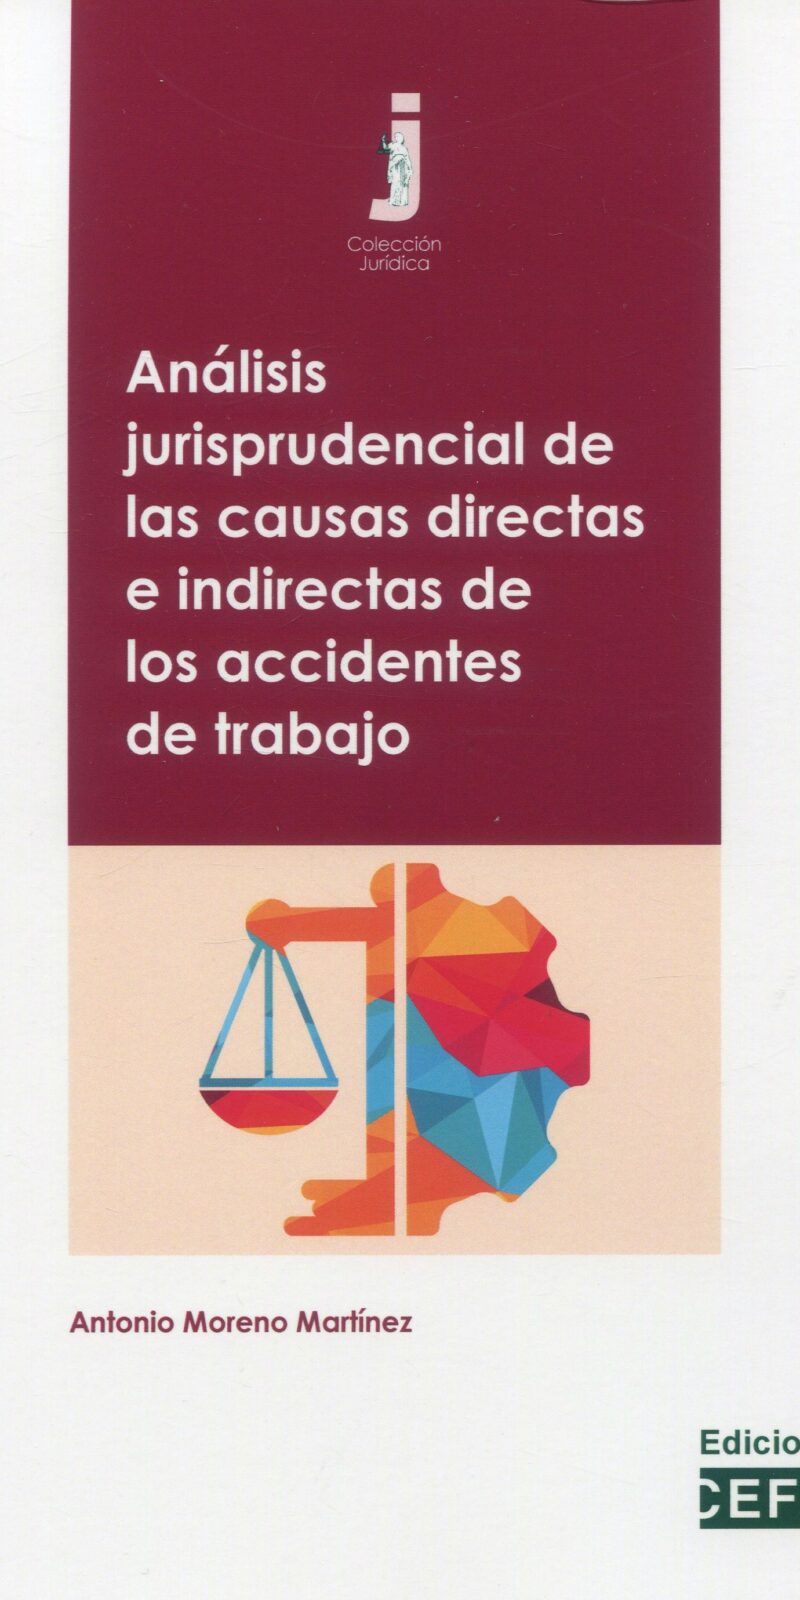 Análisis jurisprudencial de causas directas e indirectas de accidentes de trabajo 9788445444719